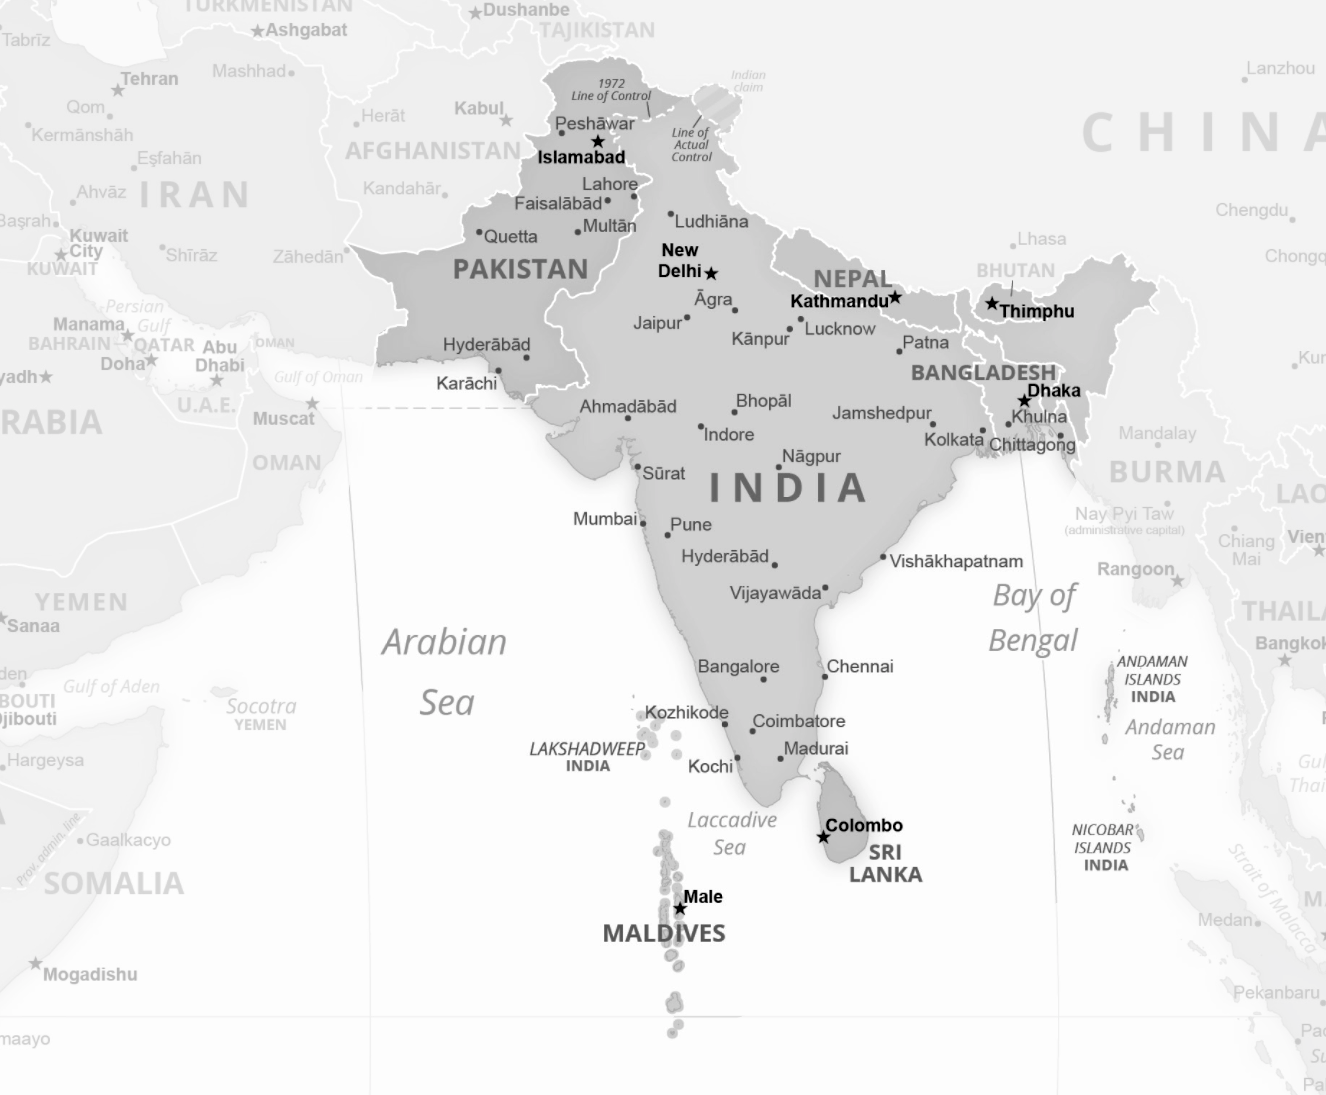 A black-and-white map of India, including Pakistan, Nepal, Bangladesh, Sri Lanka, and the Maldives.